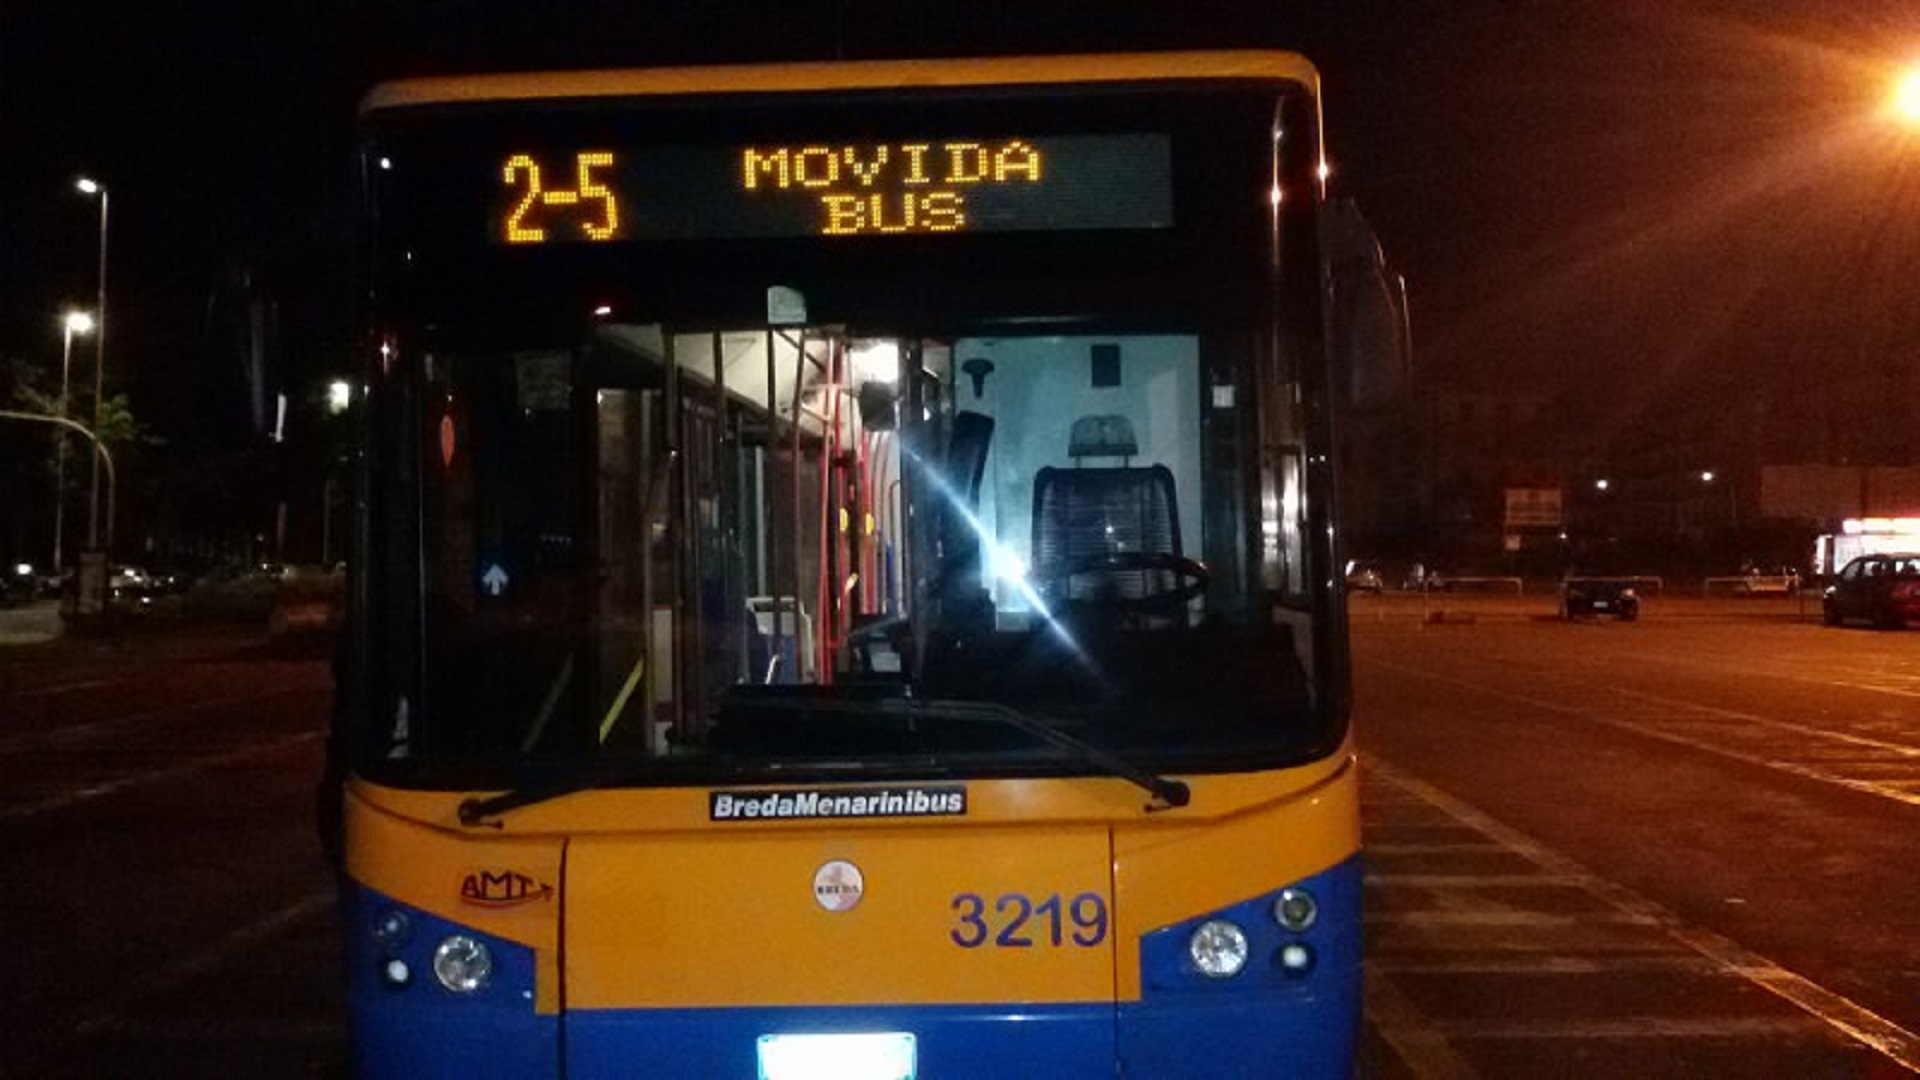 Movida bus